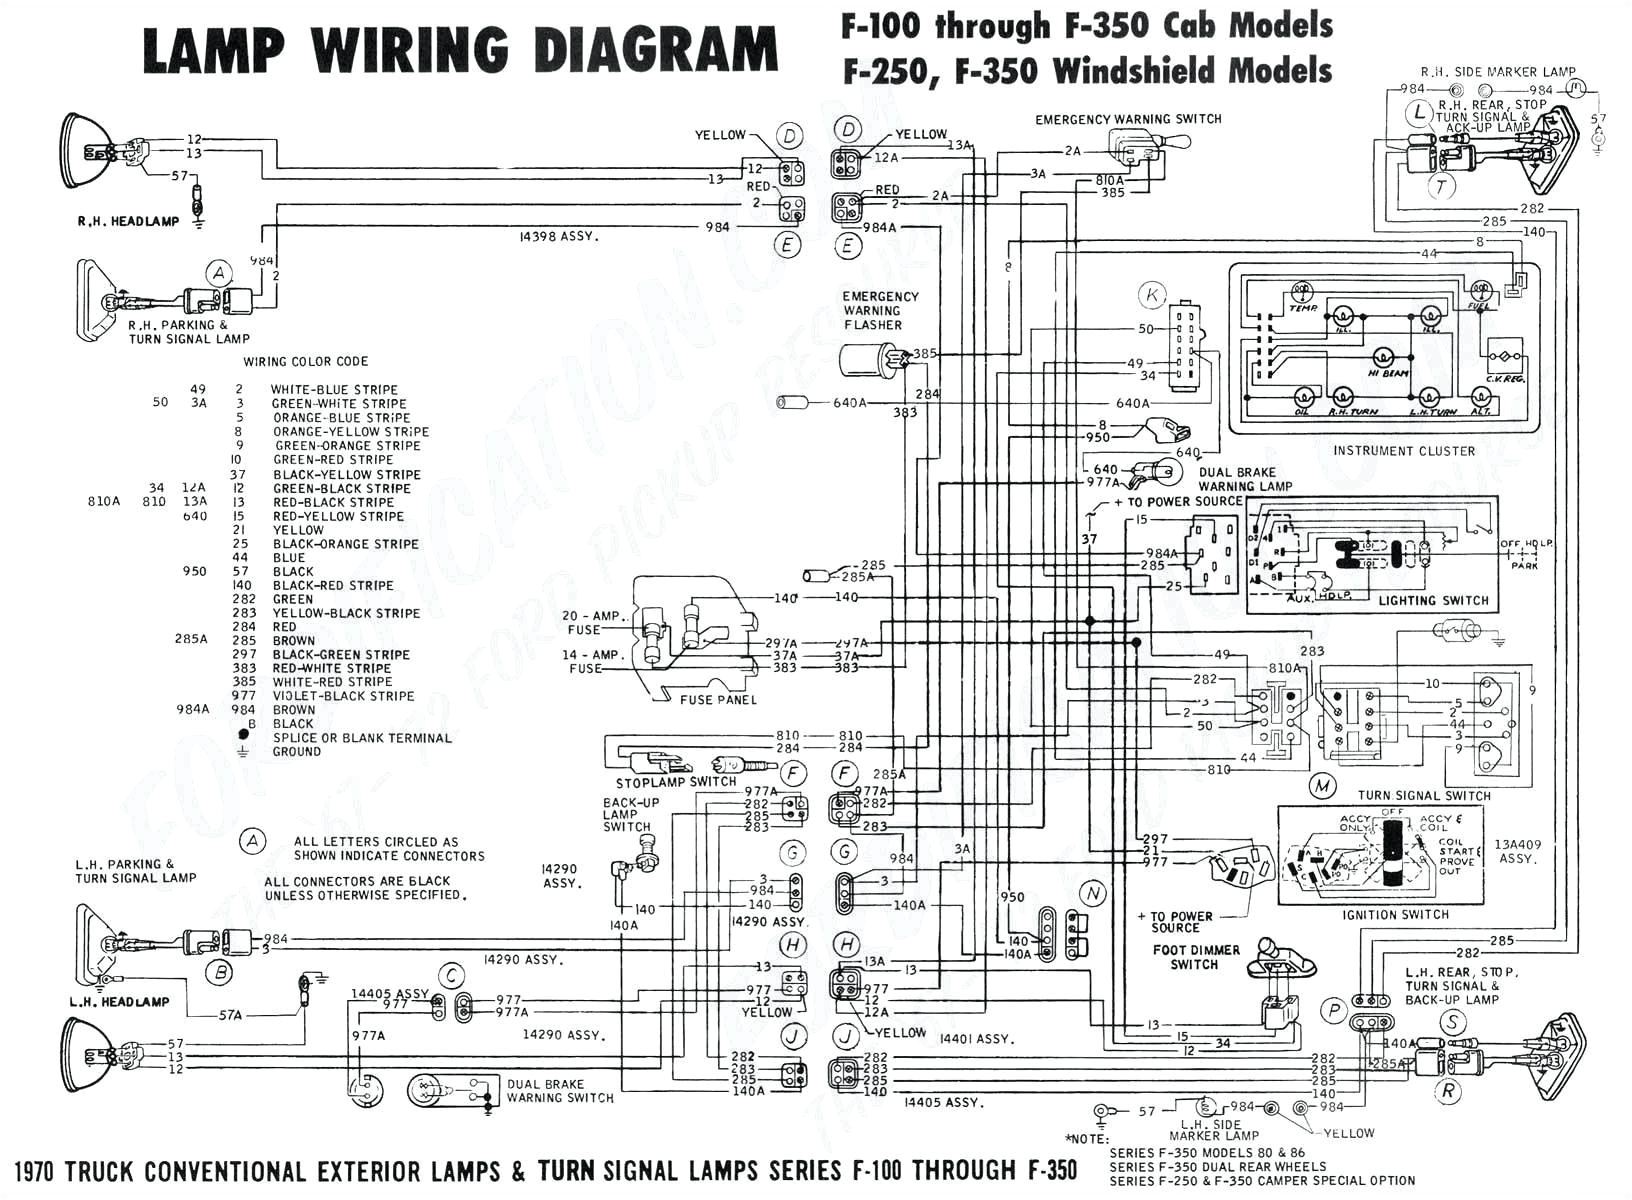 2002 f350 wiring diagram blog wiring diagram 02 f350 trailer wiring diagram